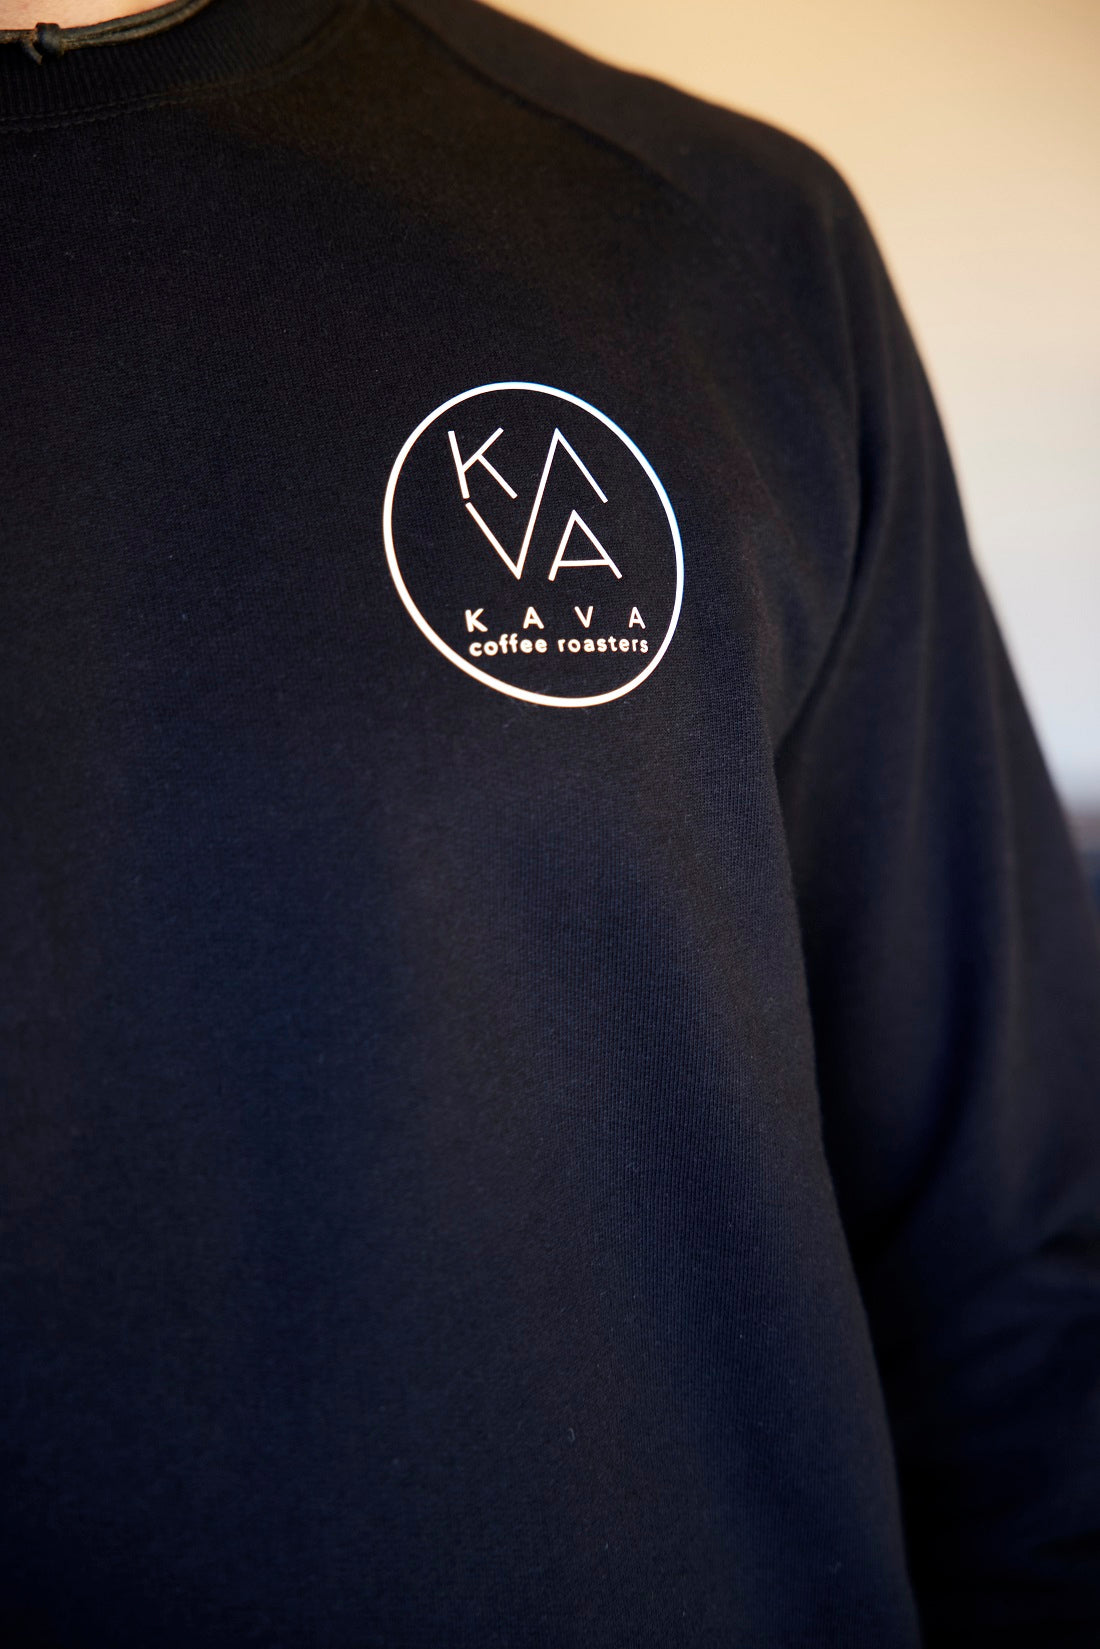 KAVA organic Sweater Logo black men